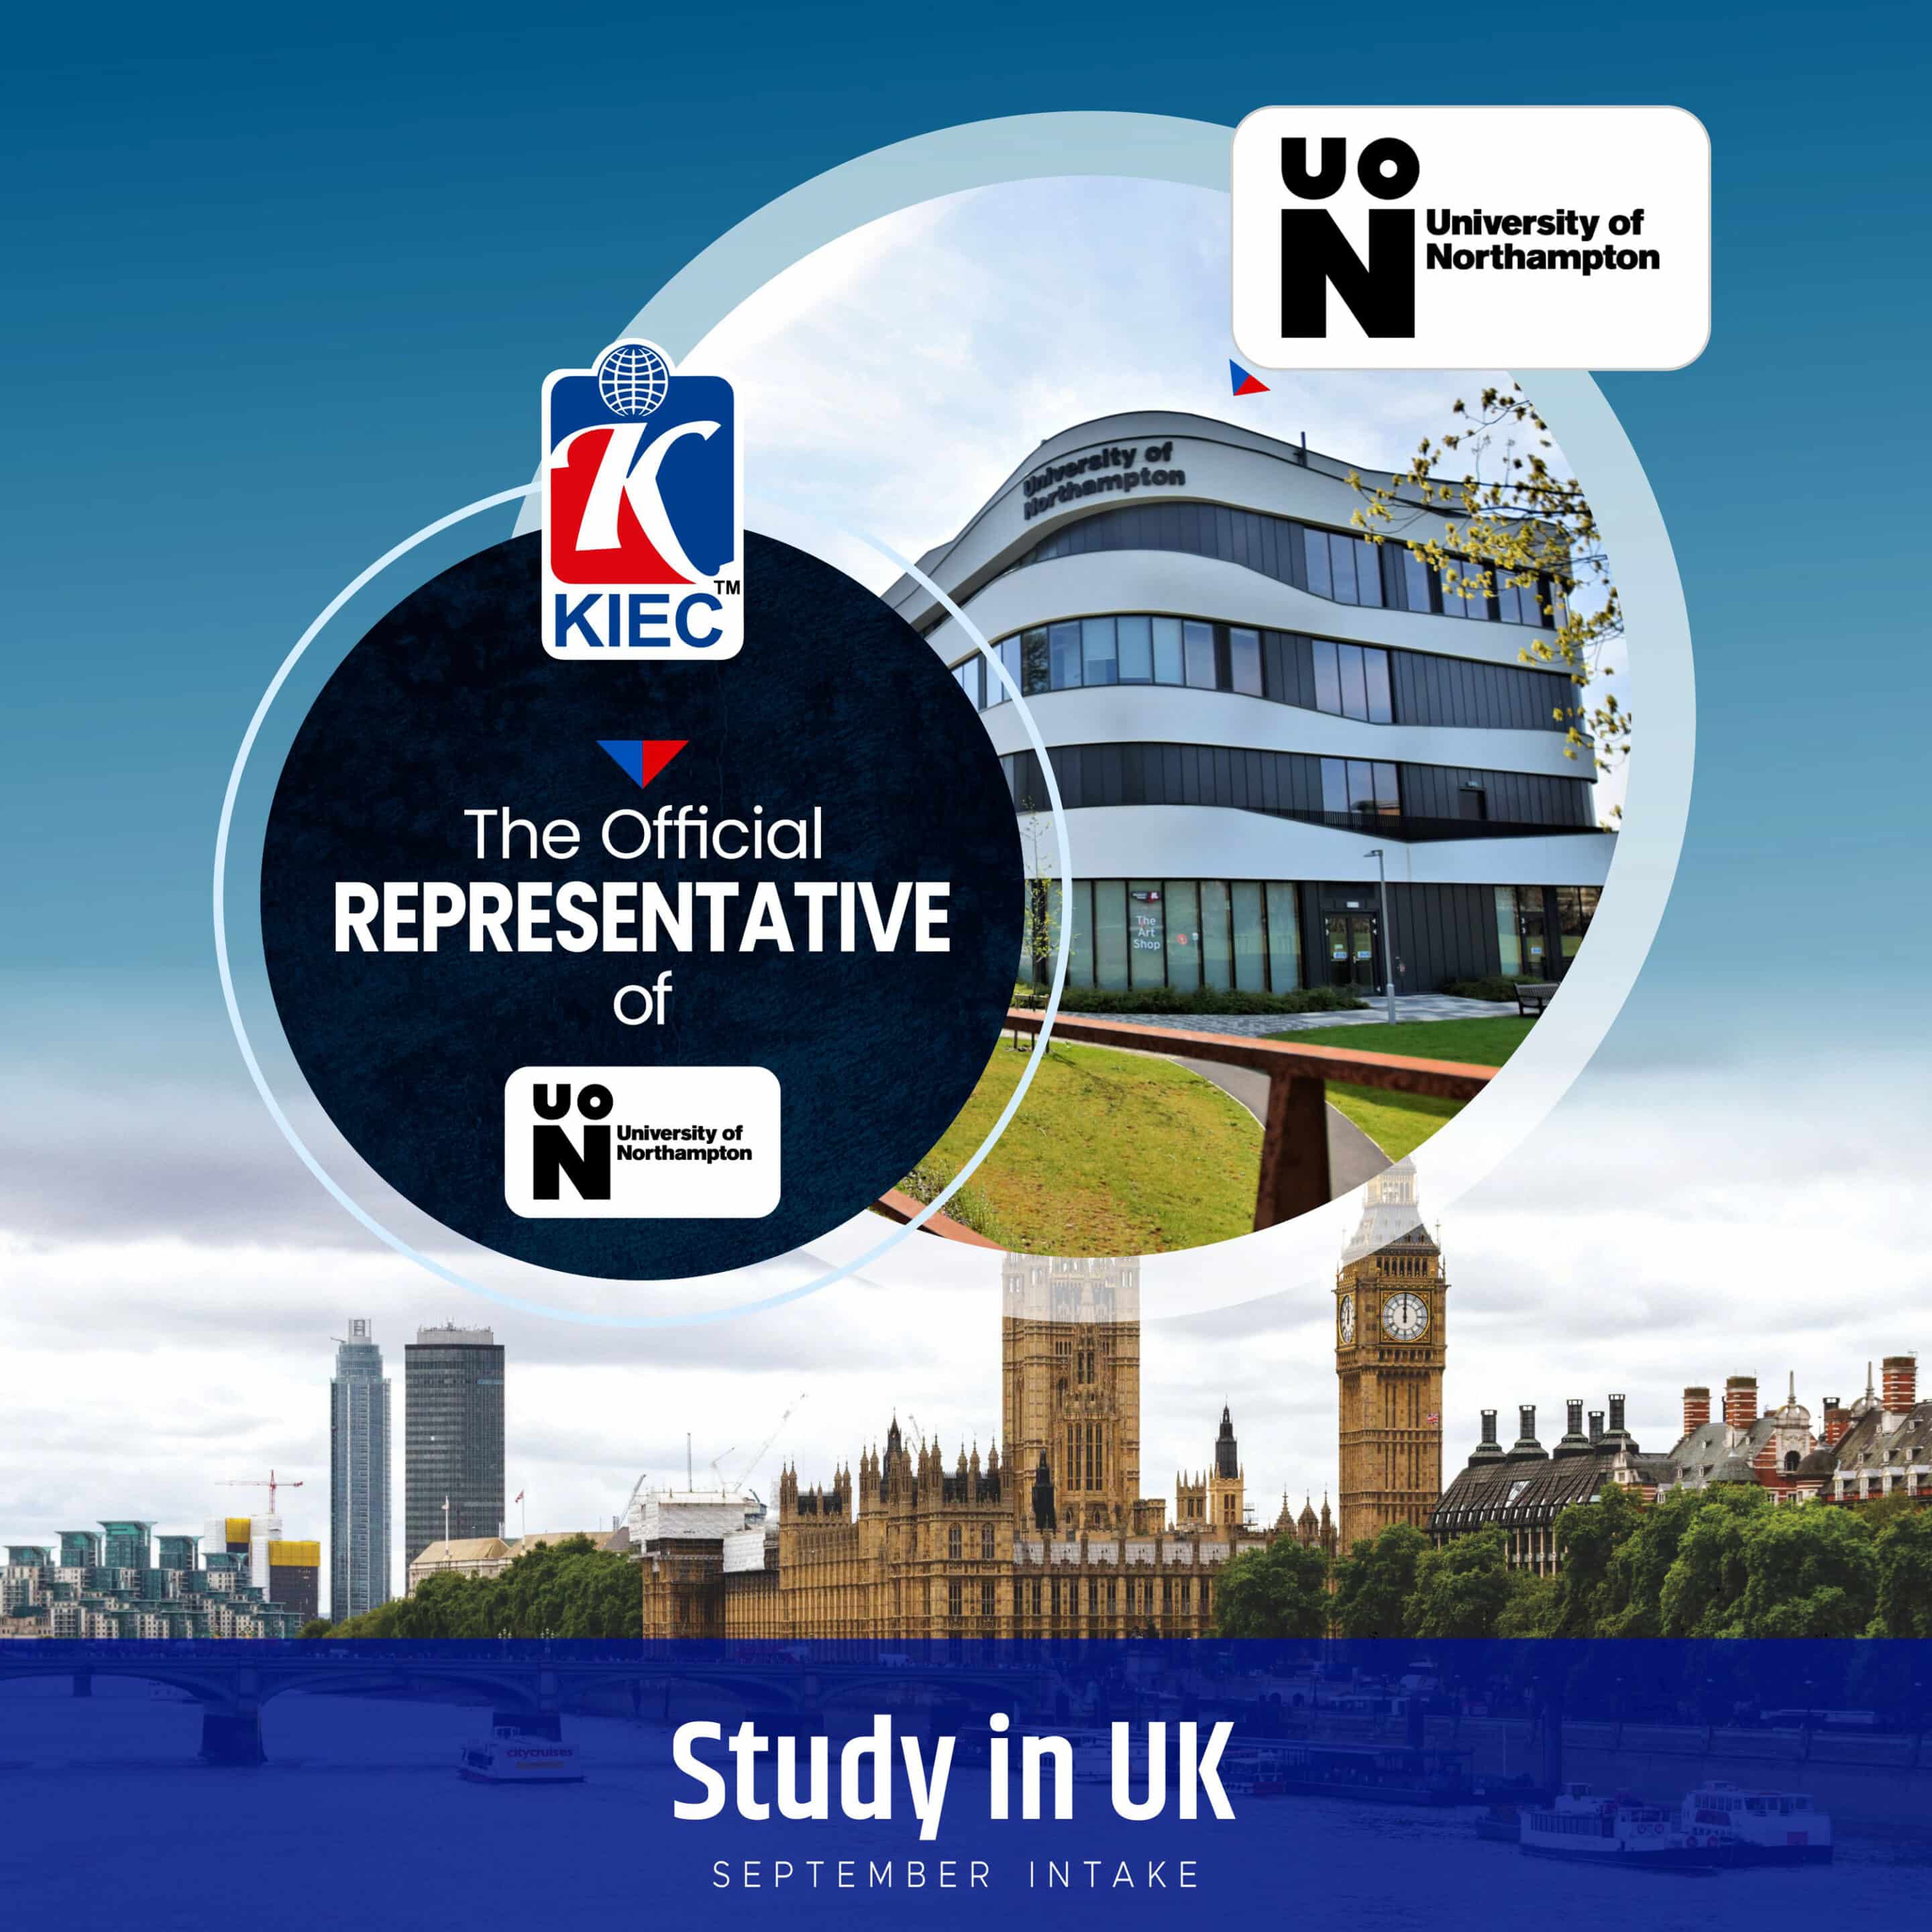 KIEC is an official representative of University of Northampton